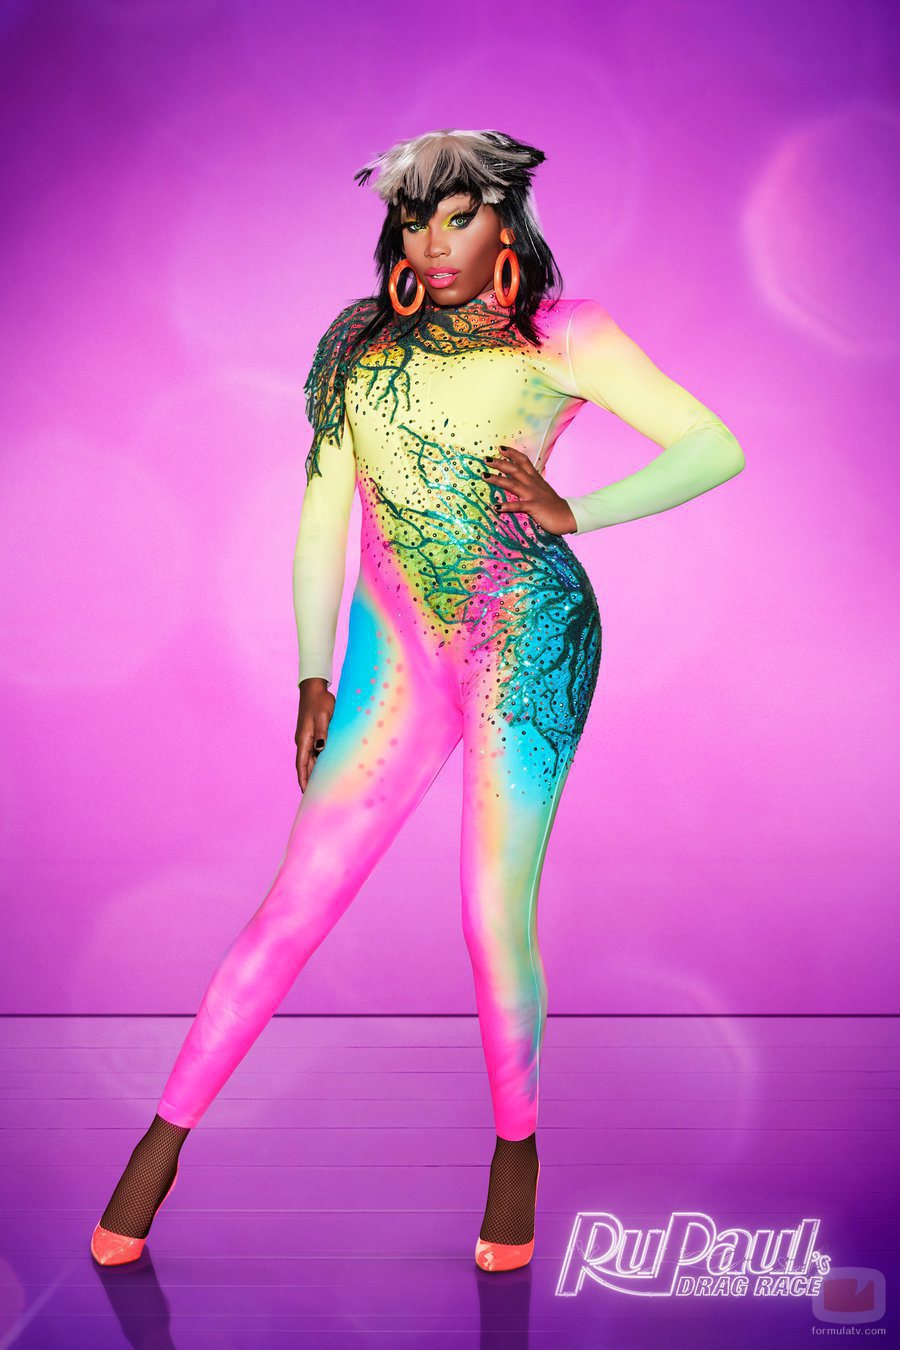 Asia T. O'Hara, la Drag Queen texana, en la décima temporada de 'RuPaul's Drag Race'